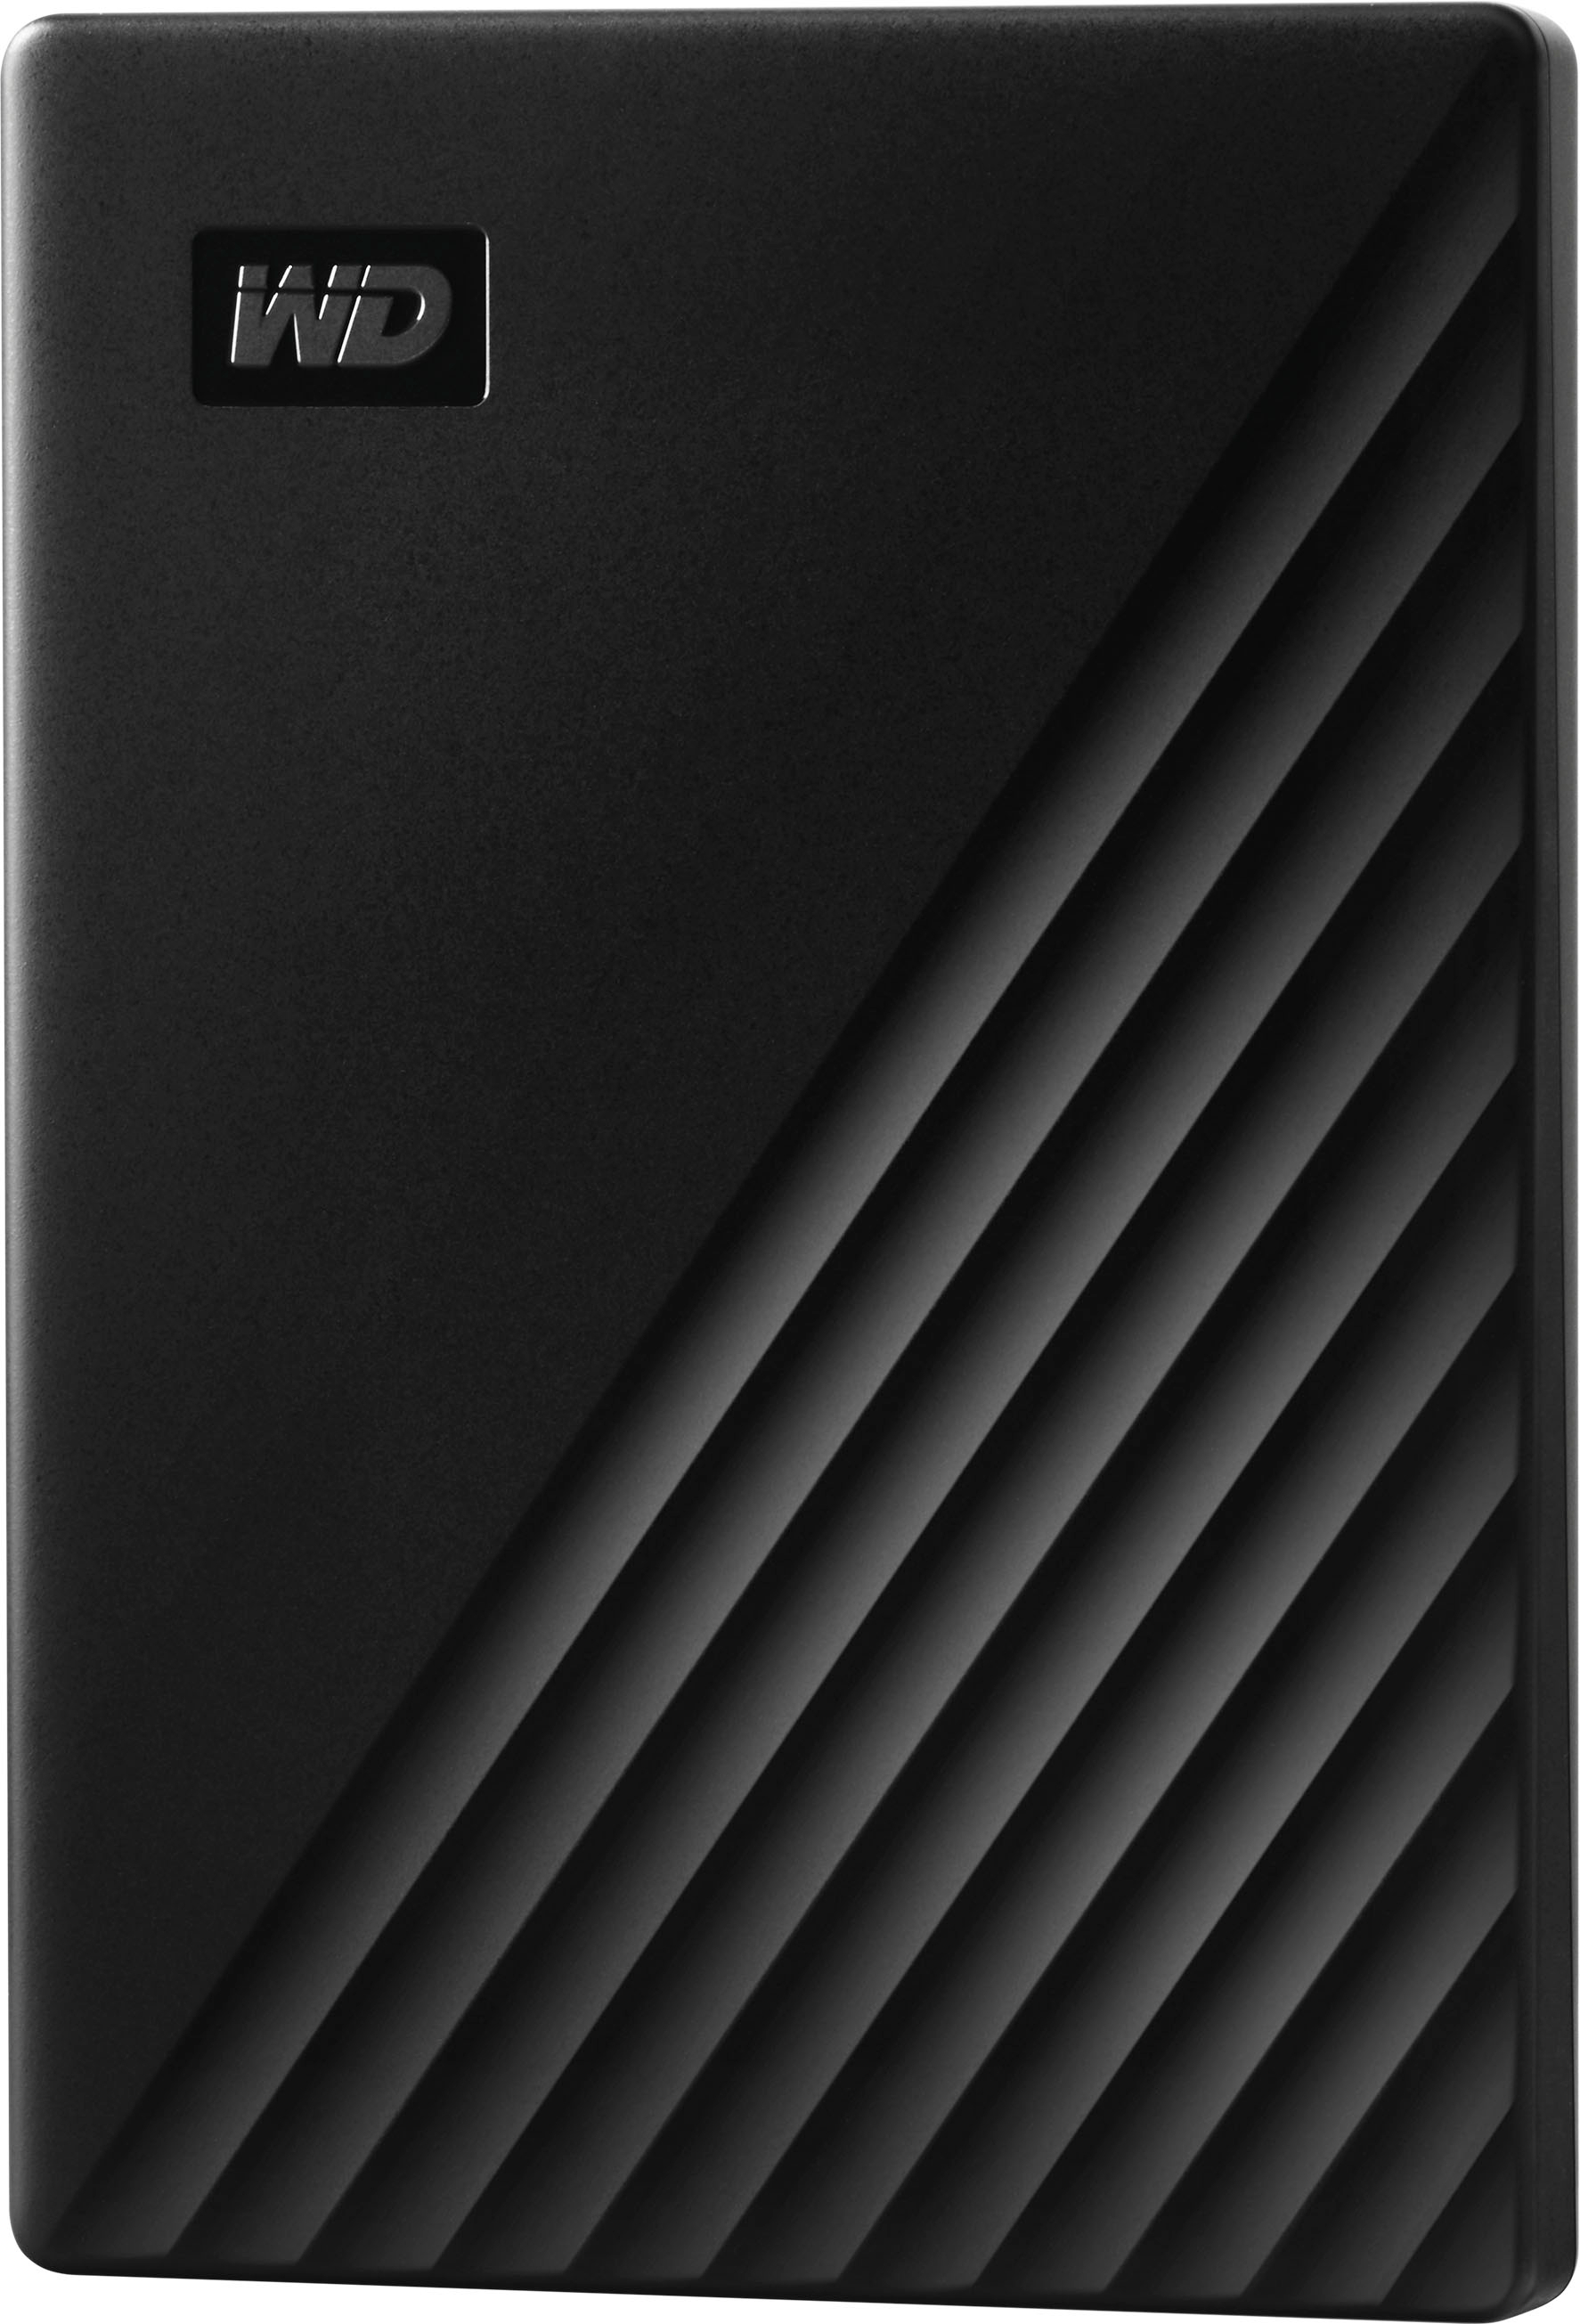 WDBYVG0010BBK-WESN Black WD 1TB My Passport Portable External Hard Drive 